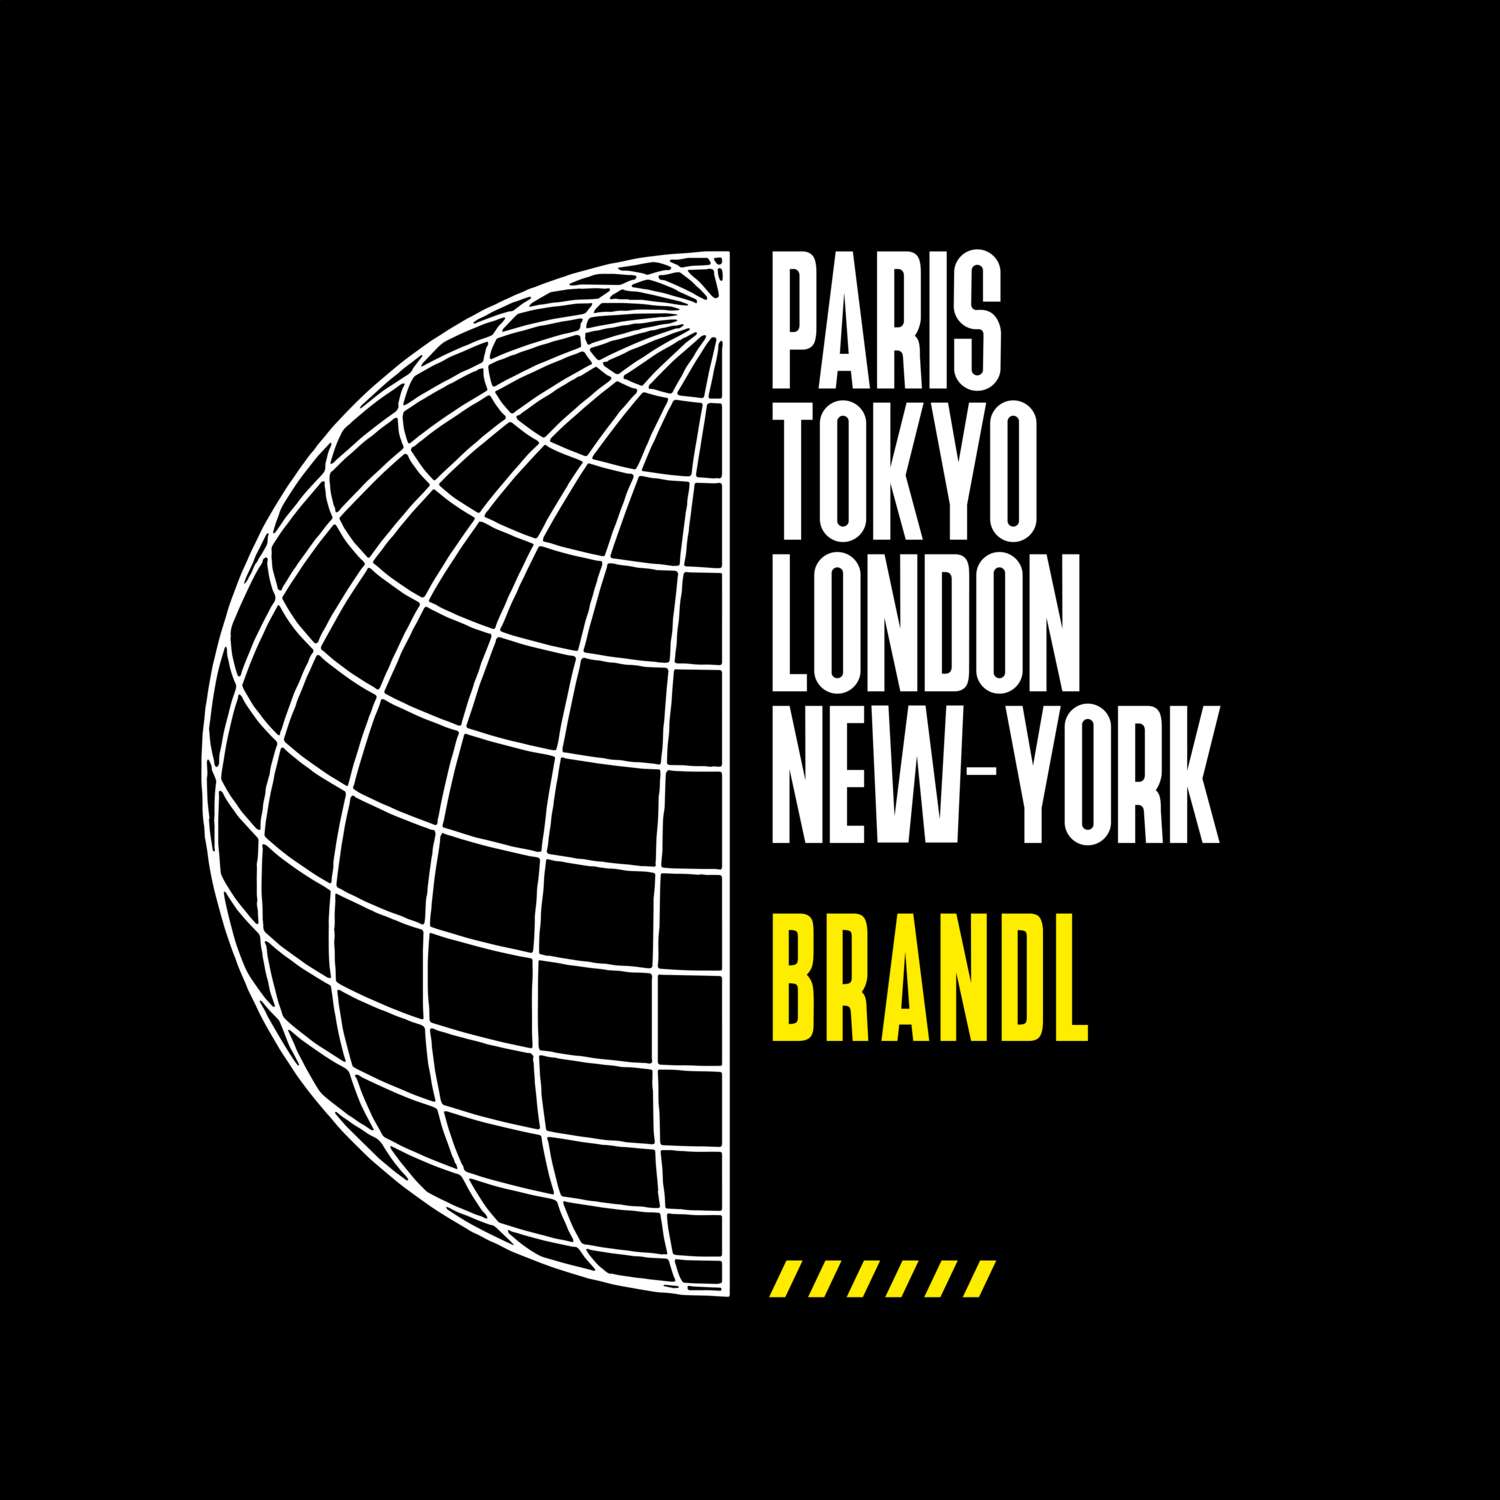 Brandl T-Shirt »Paris Tokyo London«